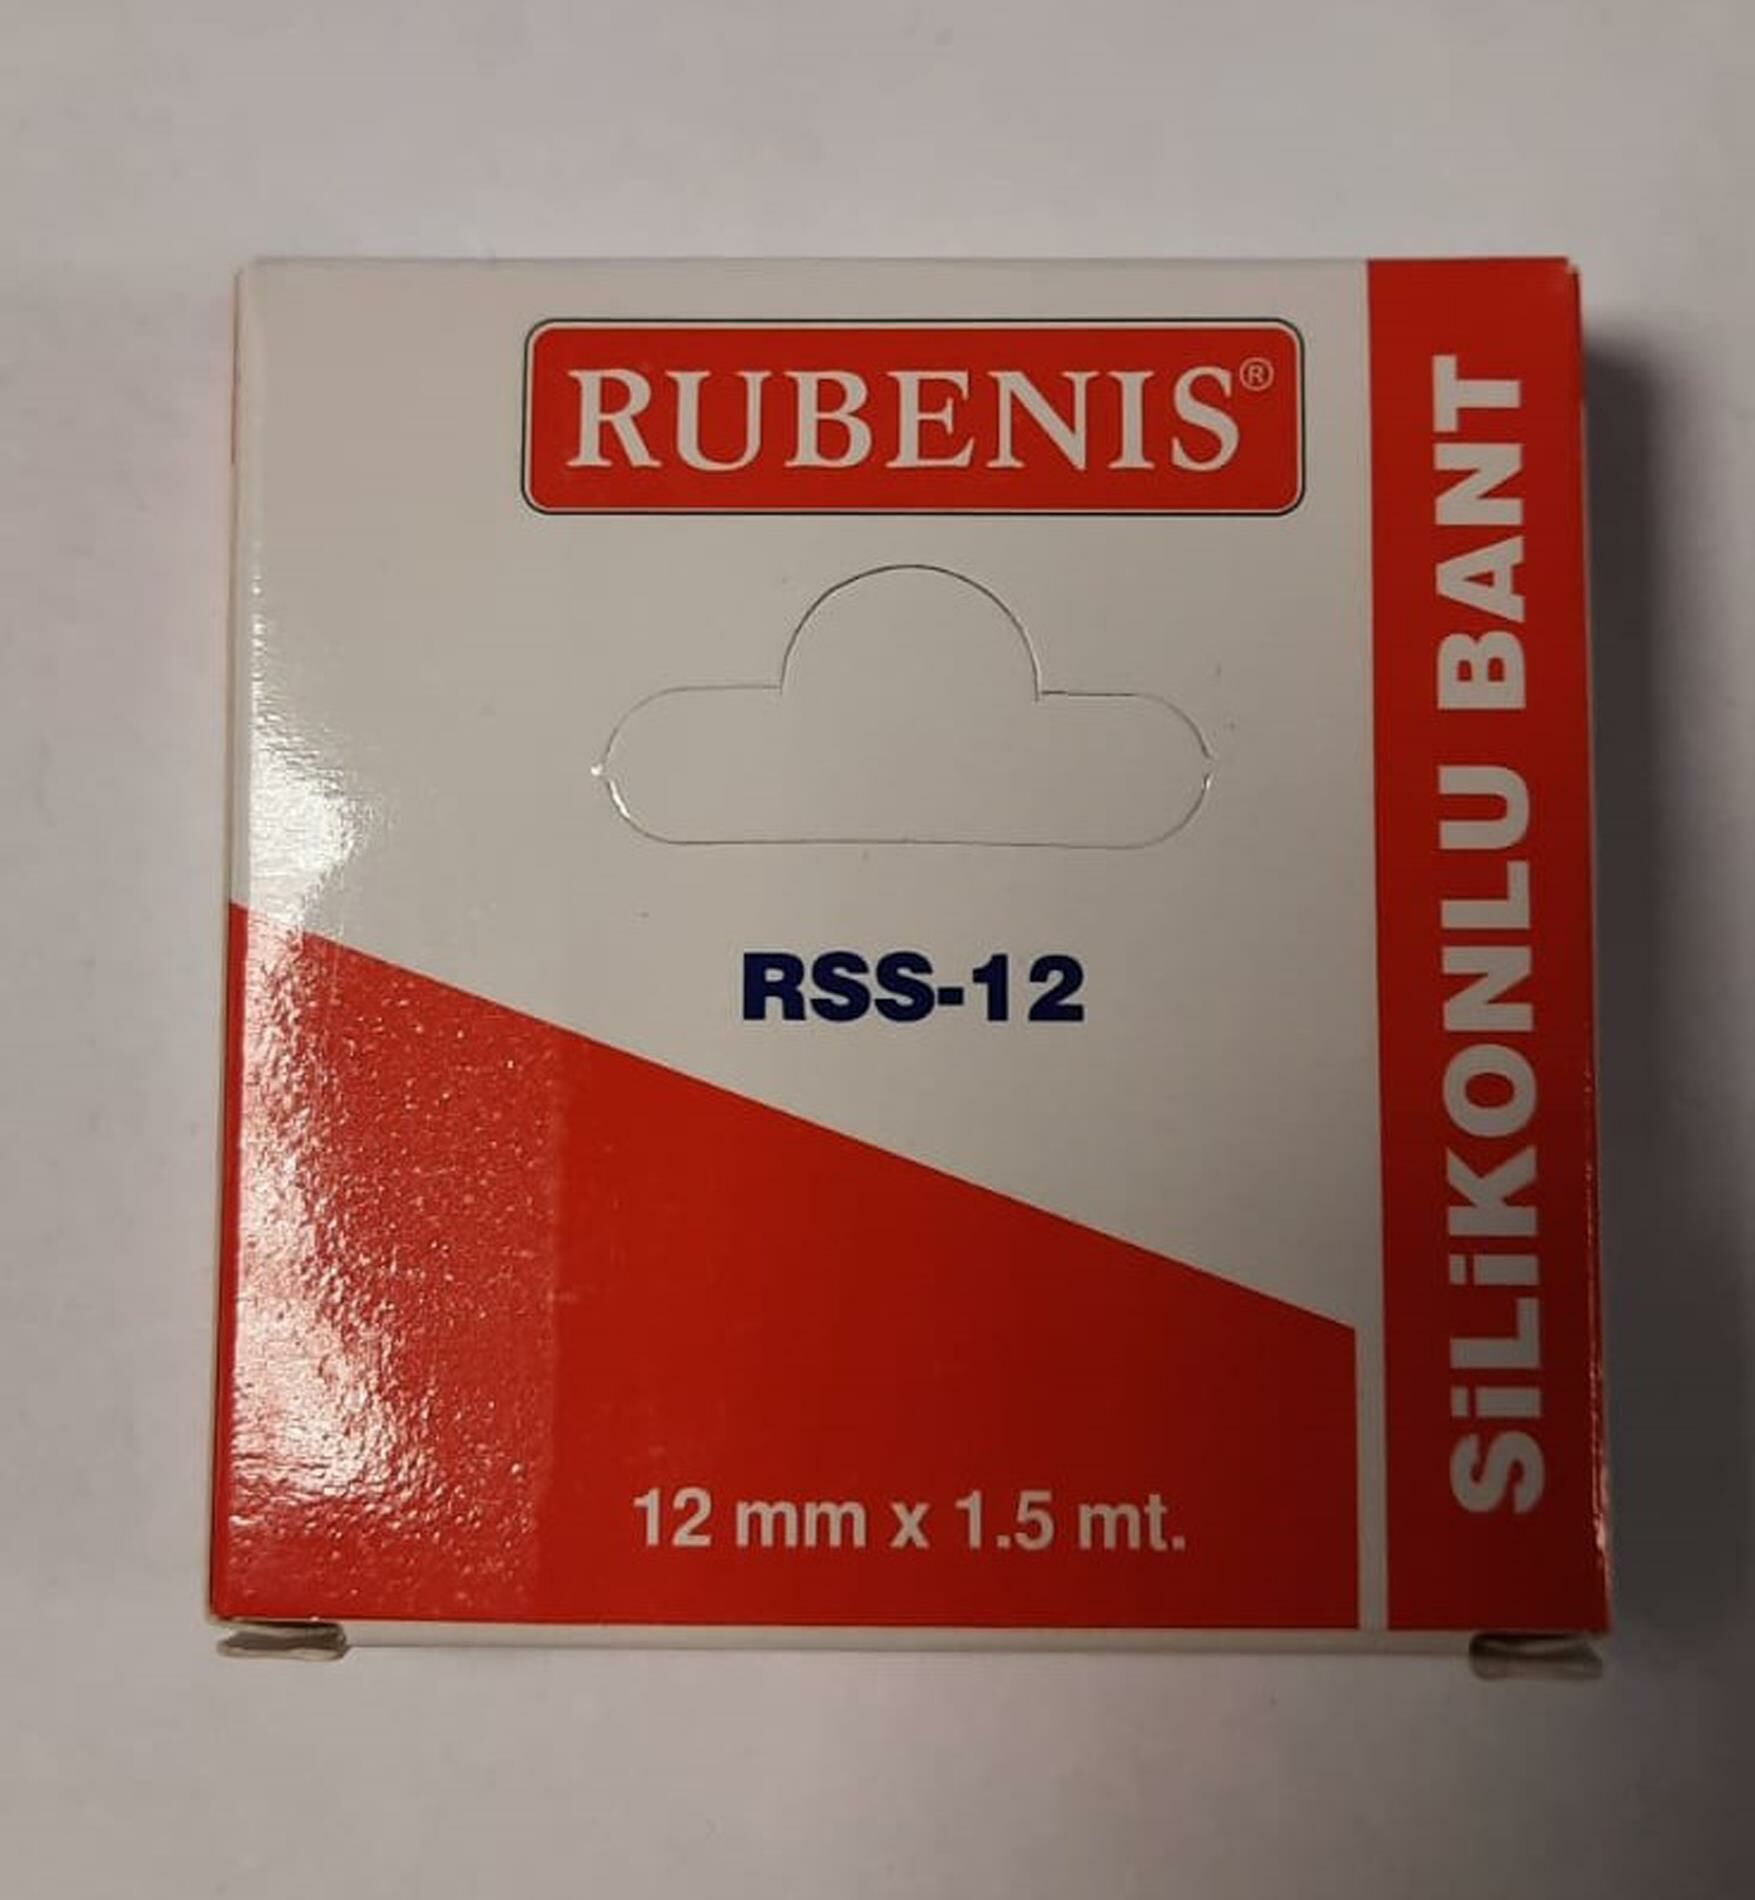 Rubenis Silikon Bant 12mm*1,5mt Rss-12 (1 adet)